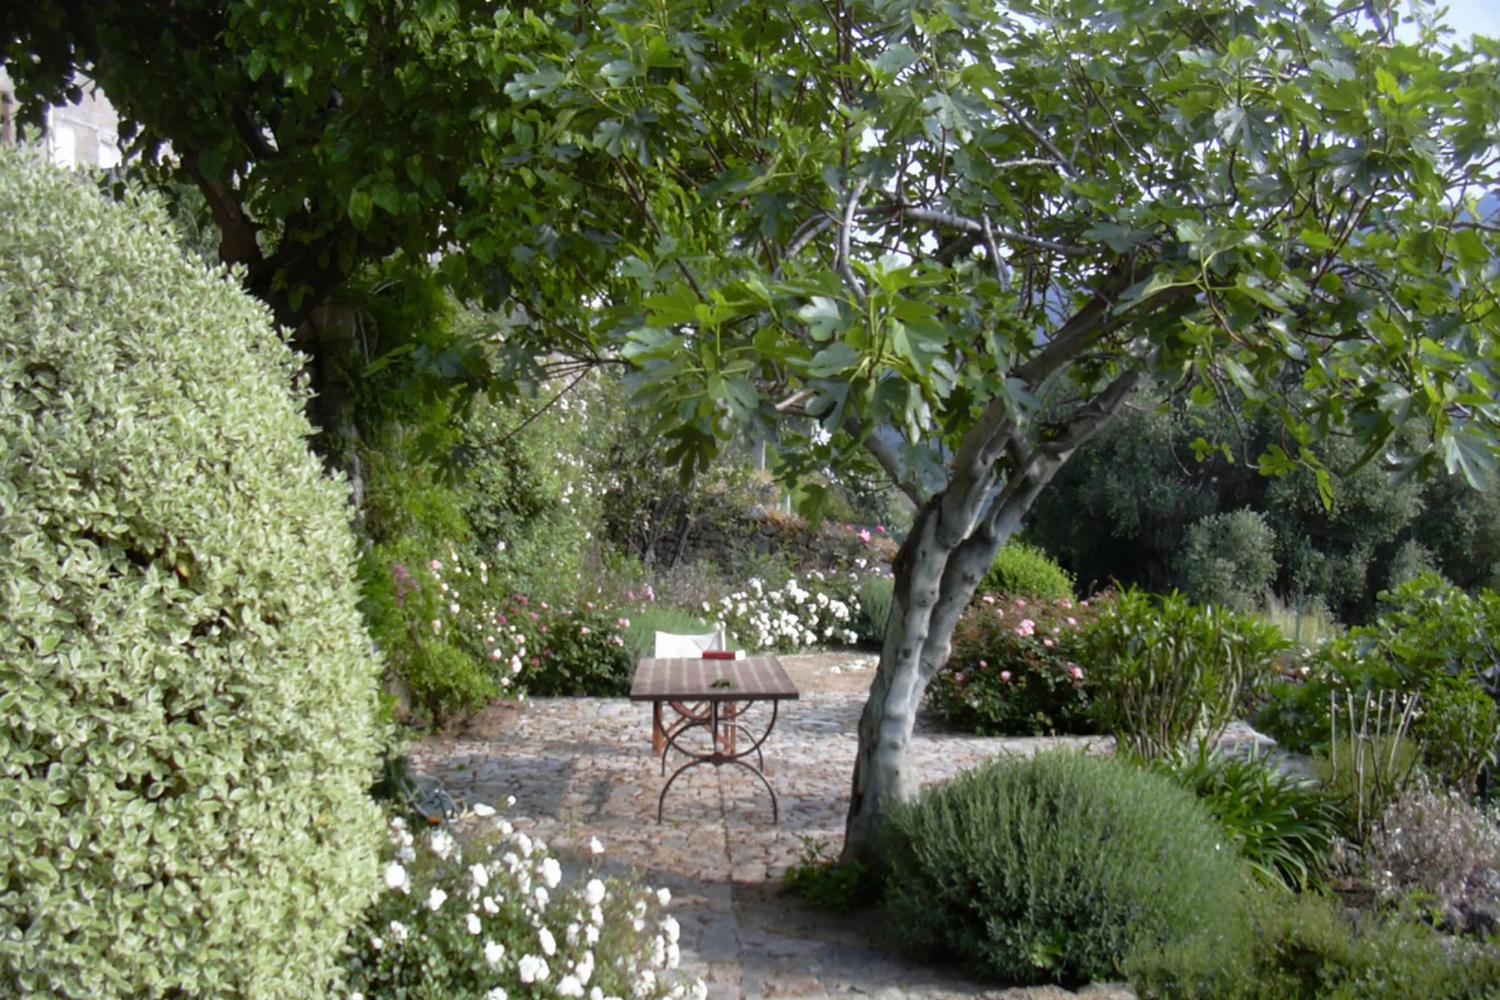 Garden in France